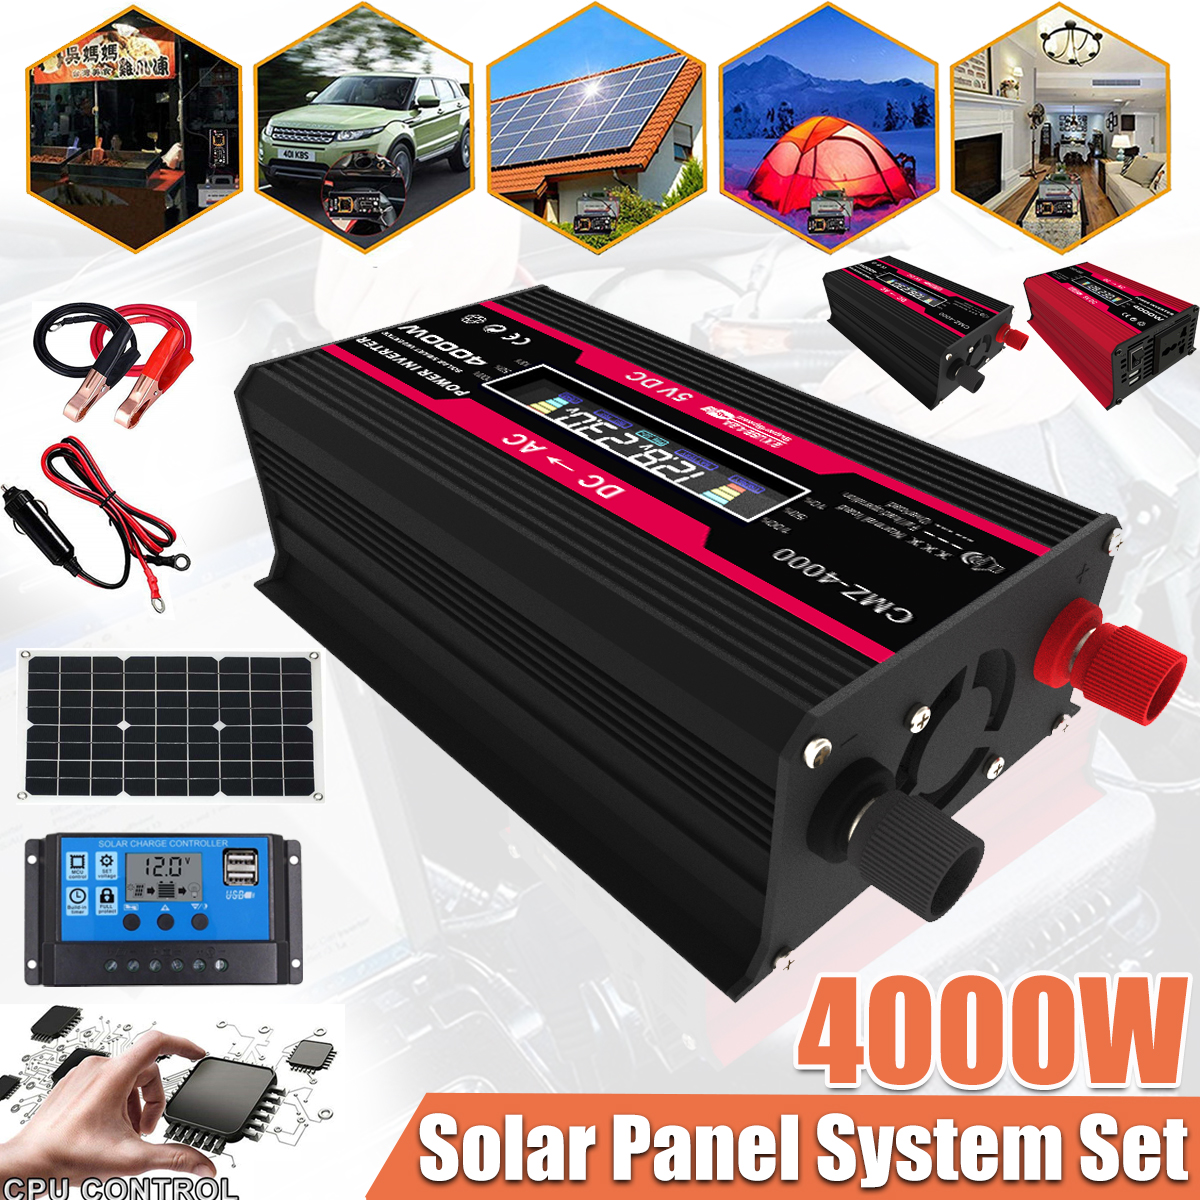 Solar-Power-System-Set-18W-Solar-Panel-300W-Power-Inverter-30A-Controller-Kit-Solar-Panel-Battery-Ch-1844953-1